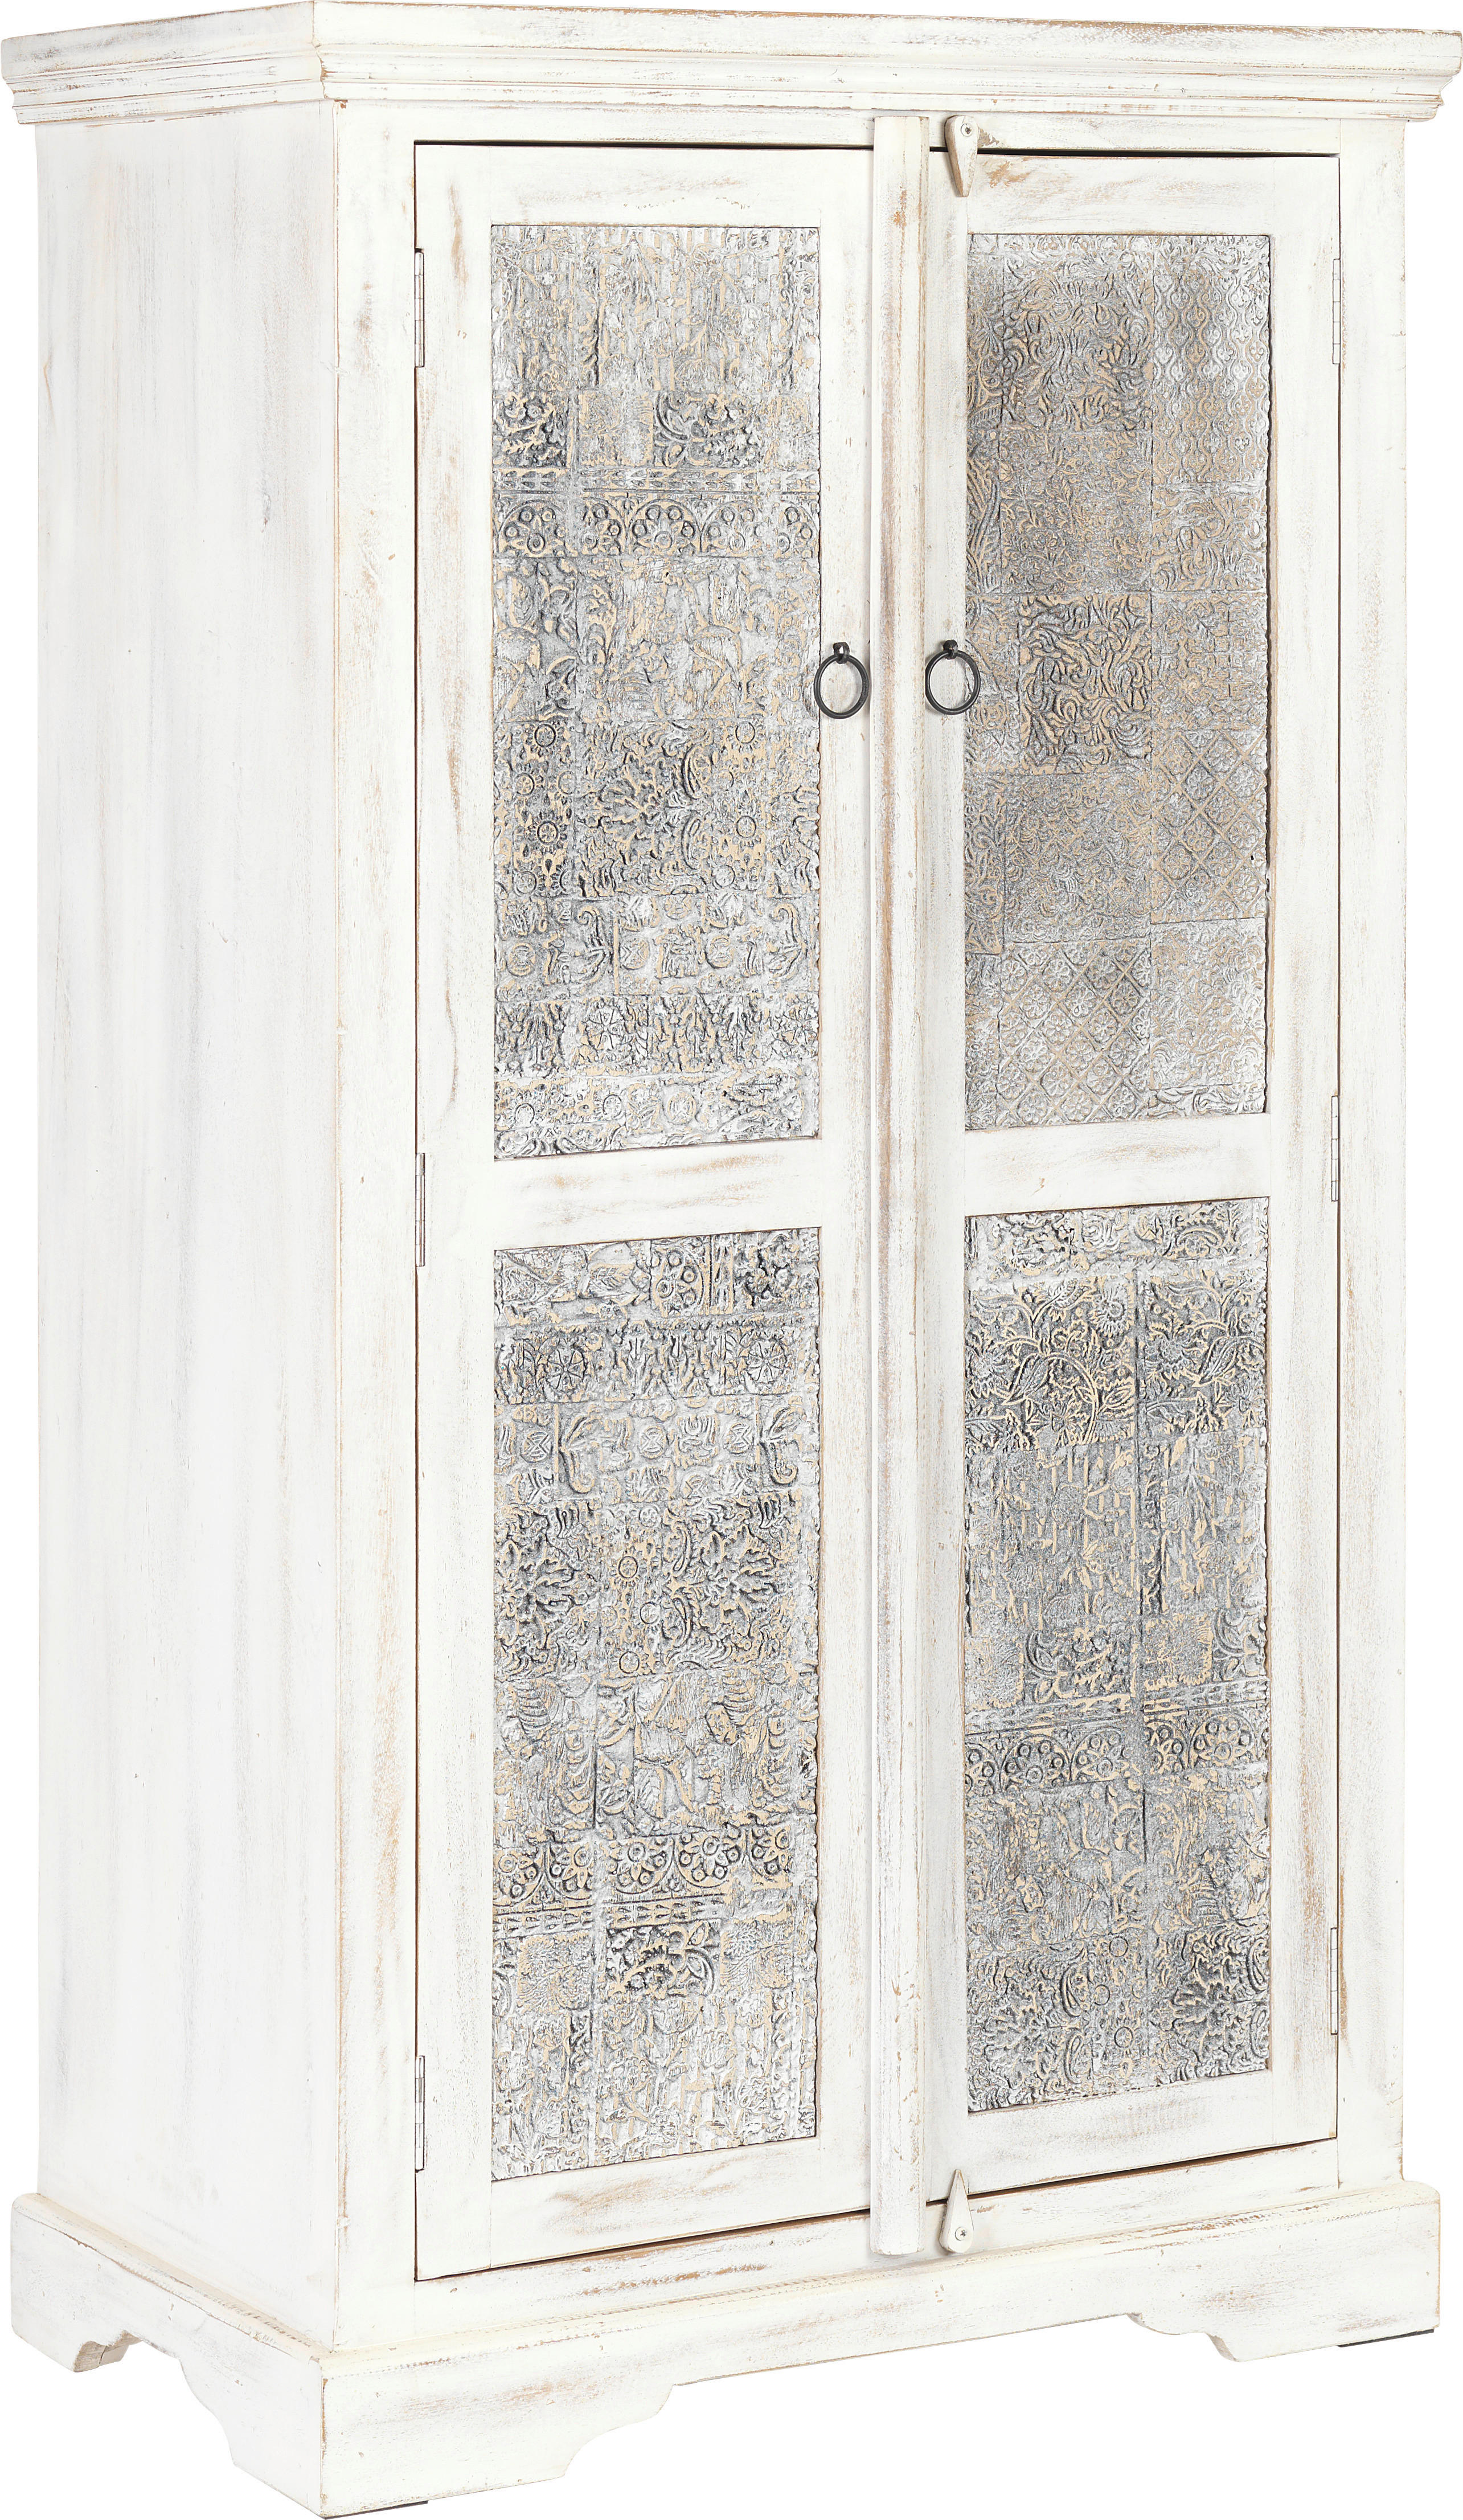 Ambia Home SKŘÍŇ, mangové dřevo, bílá, 80/145/45 cm - bílá - dřevo,mangové dřevo